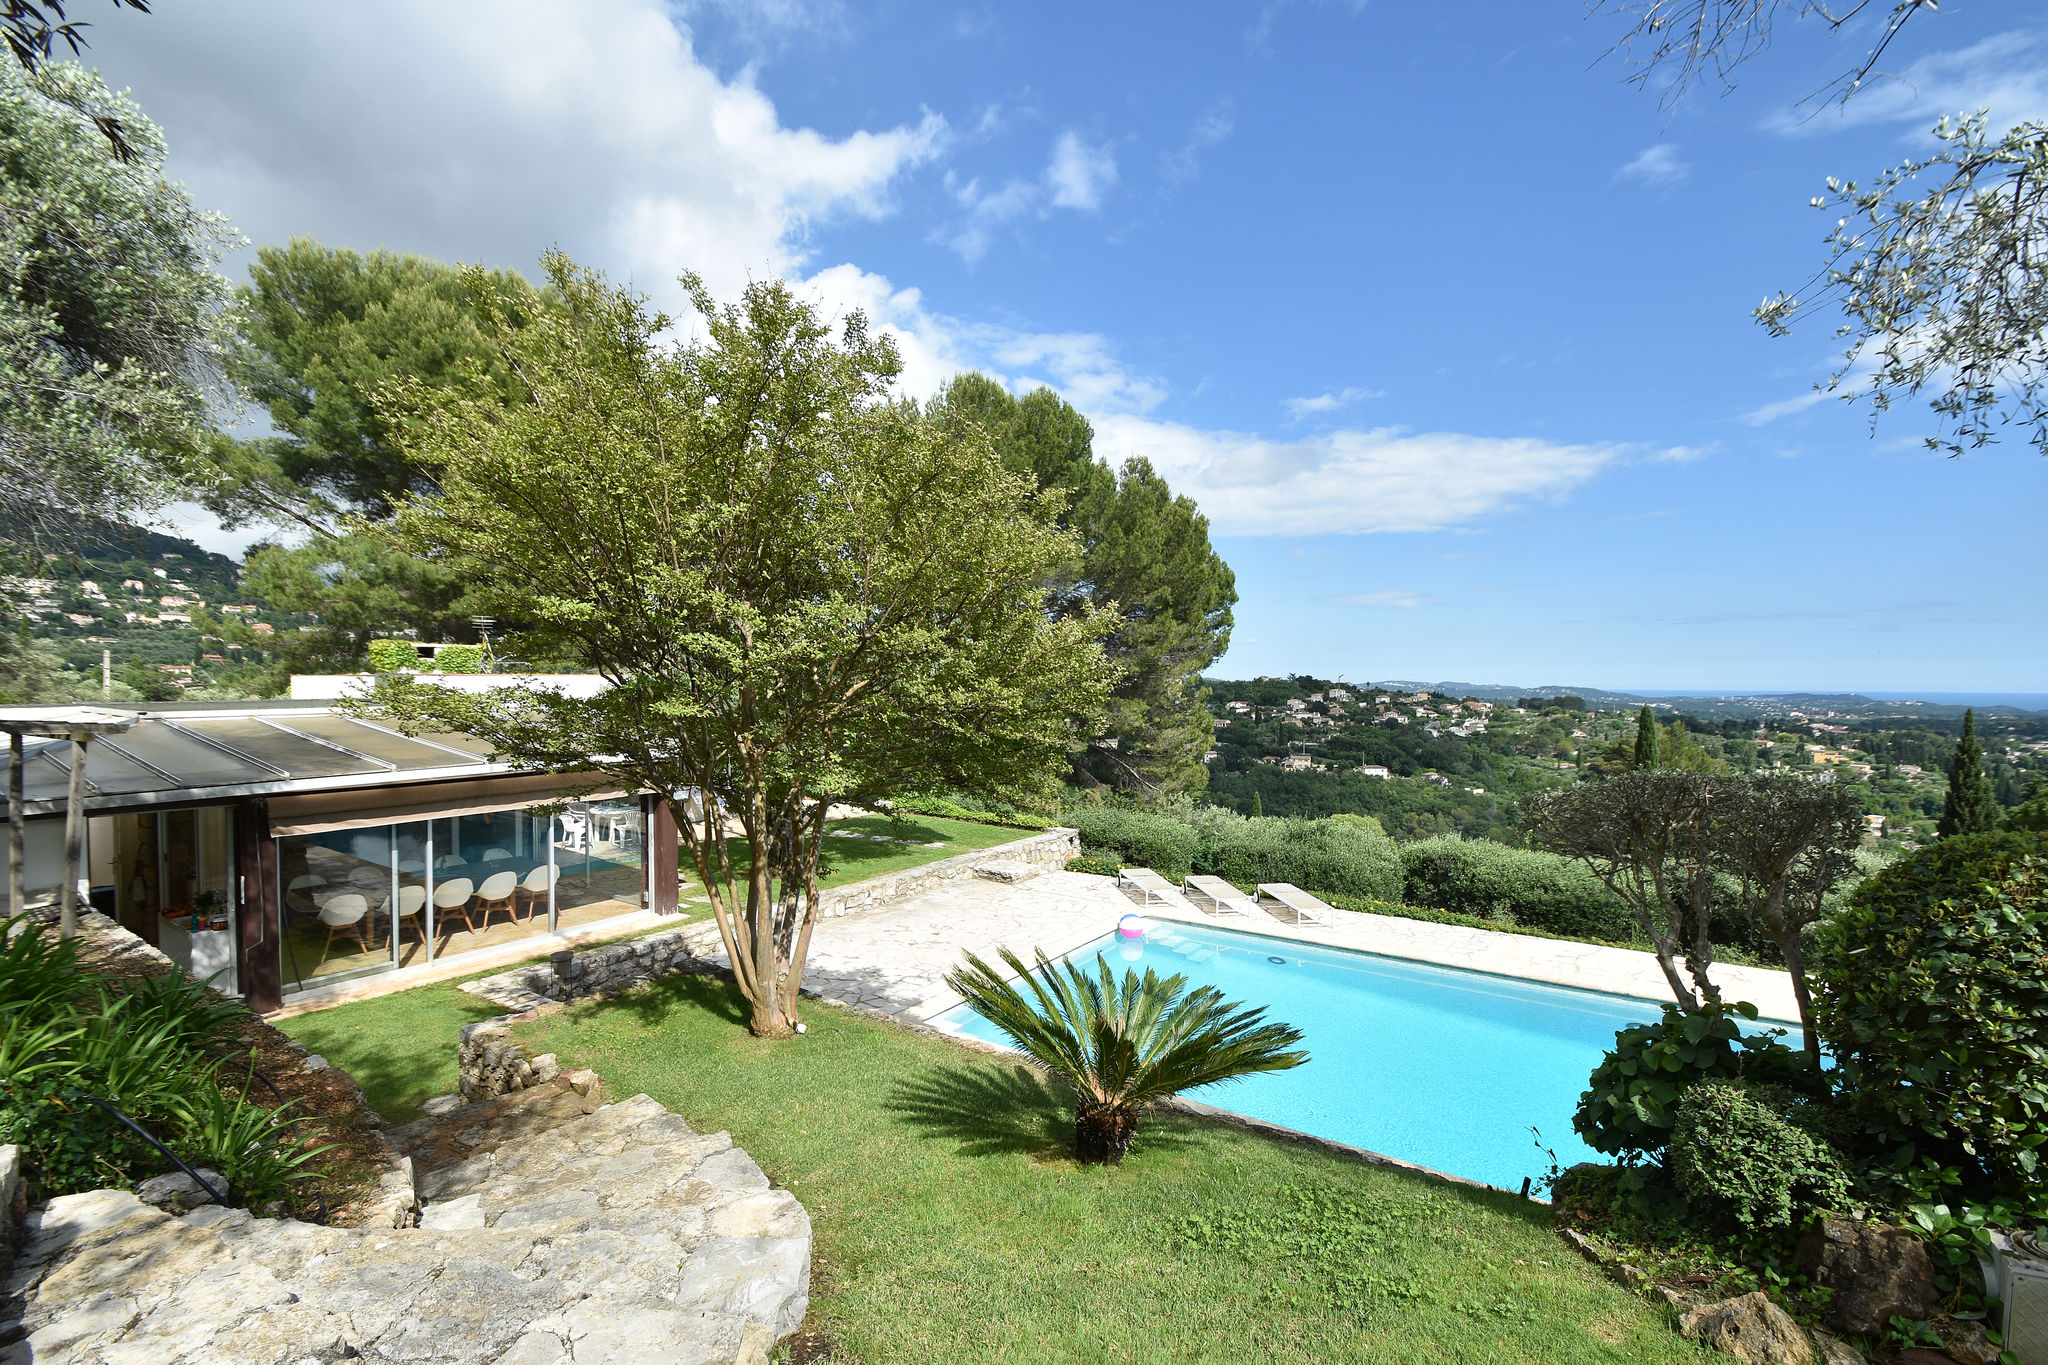 Moderne, charmante villa in Grasse met privézwembad